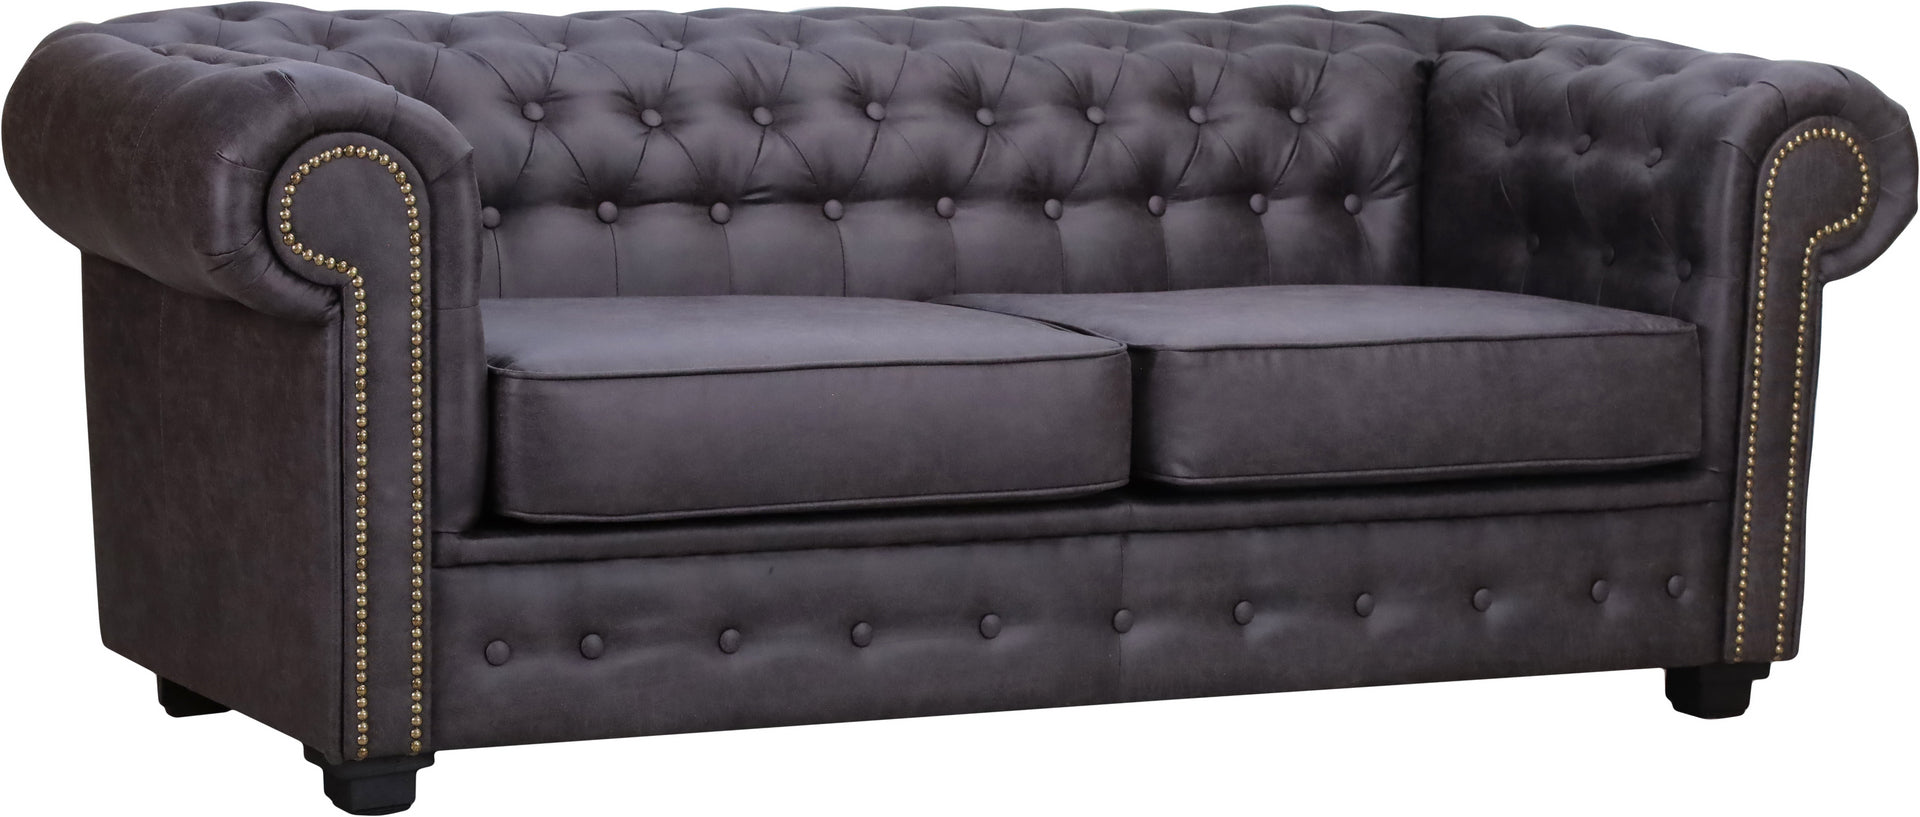 Conjunto sofa 3+2 plazas - ASTOR